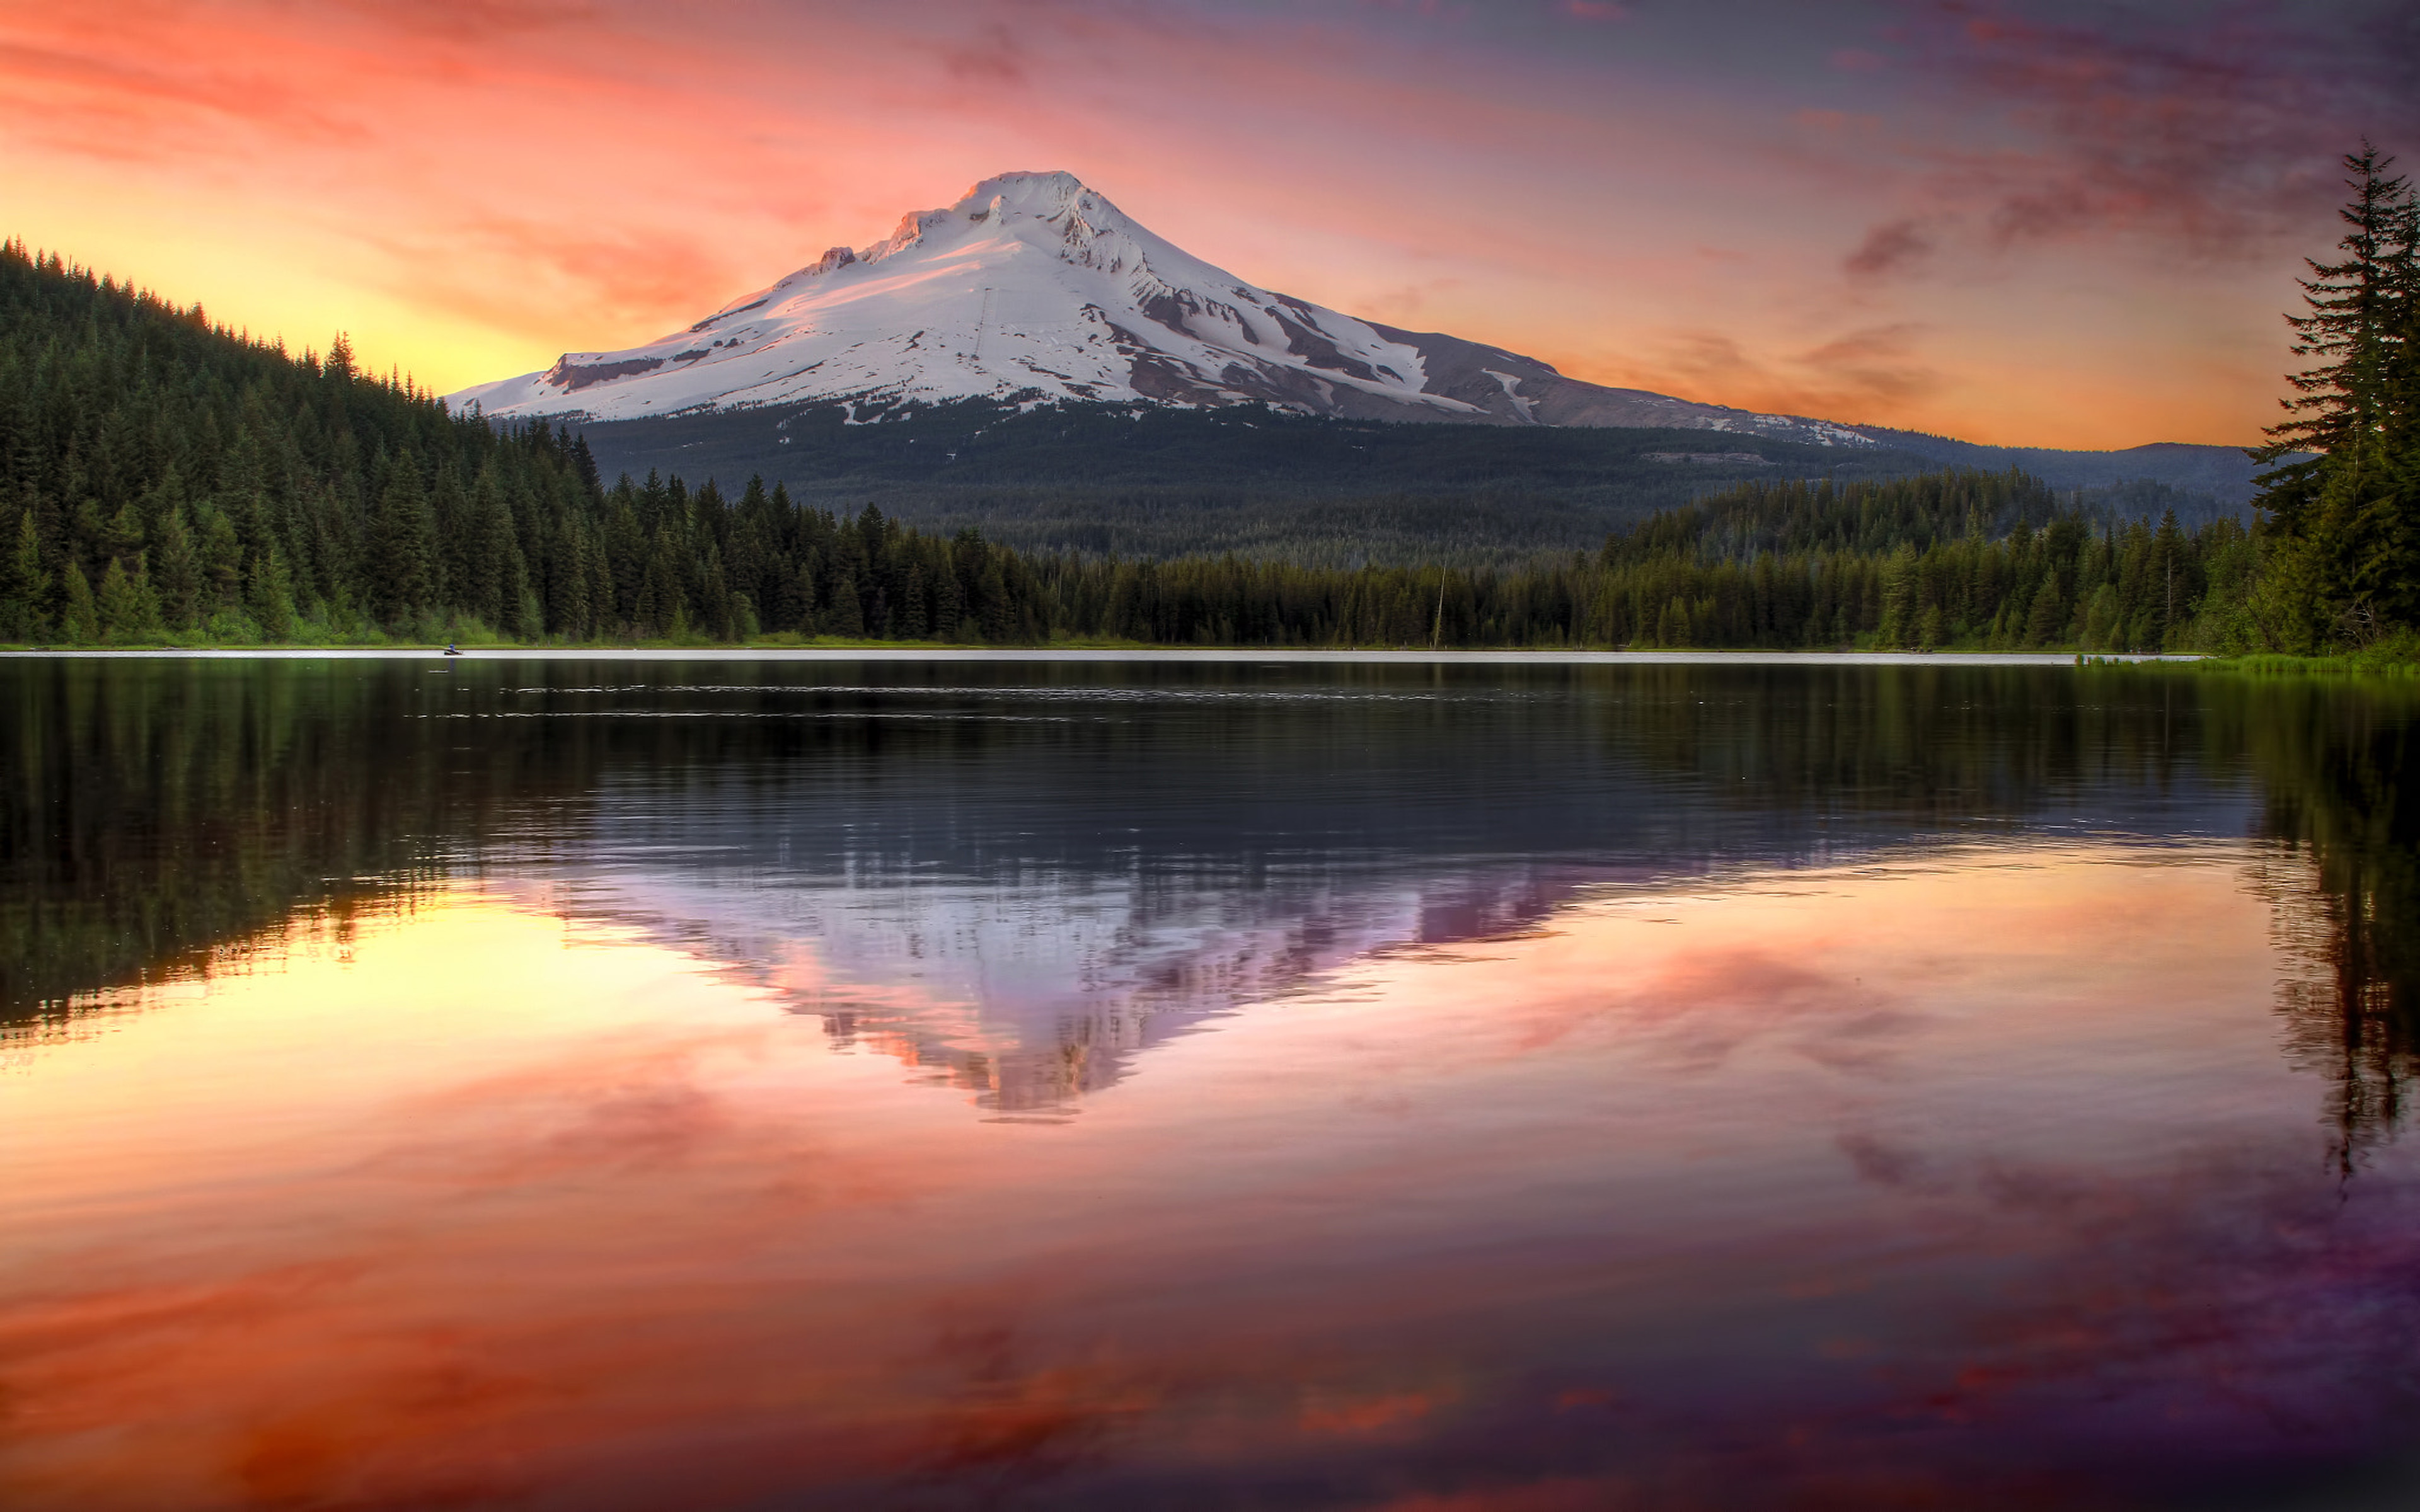 Sunset Trillium Lake Reflection Of Mount Hood Stratovolcano In Oregon